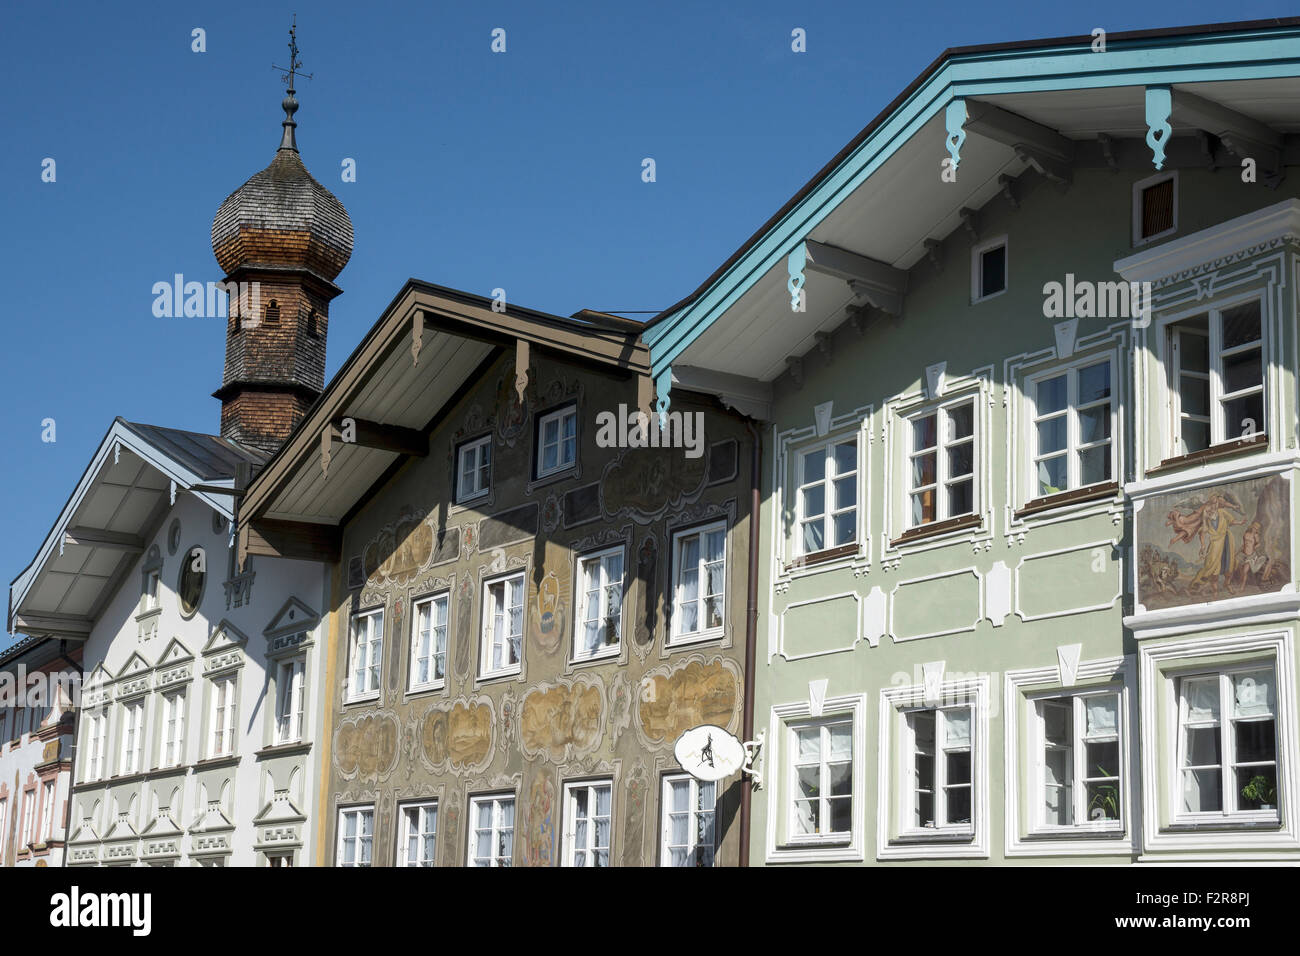 Facciate dipinte, strada pedonale, Market street, Bad Tölz, Alta Baviera, Baviera, Germania Foto Stock